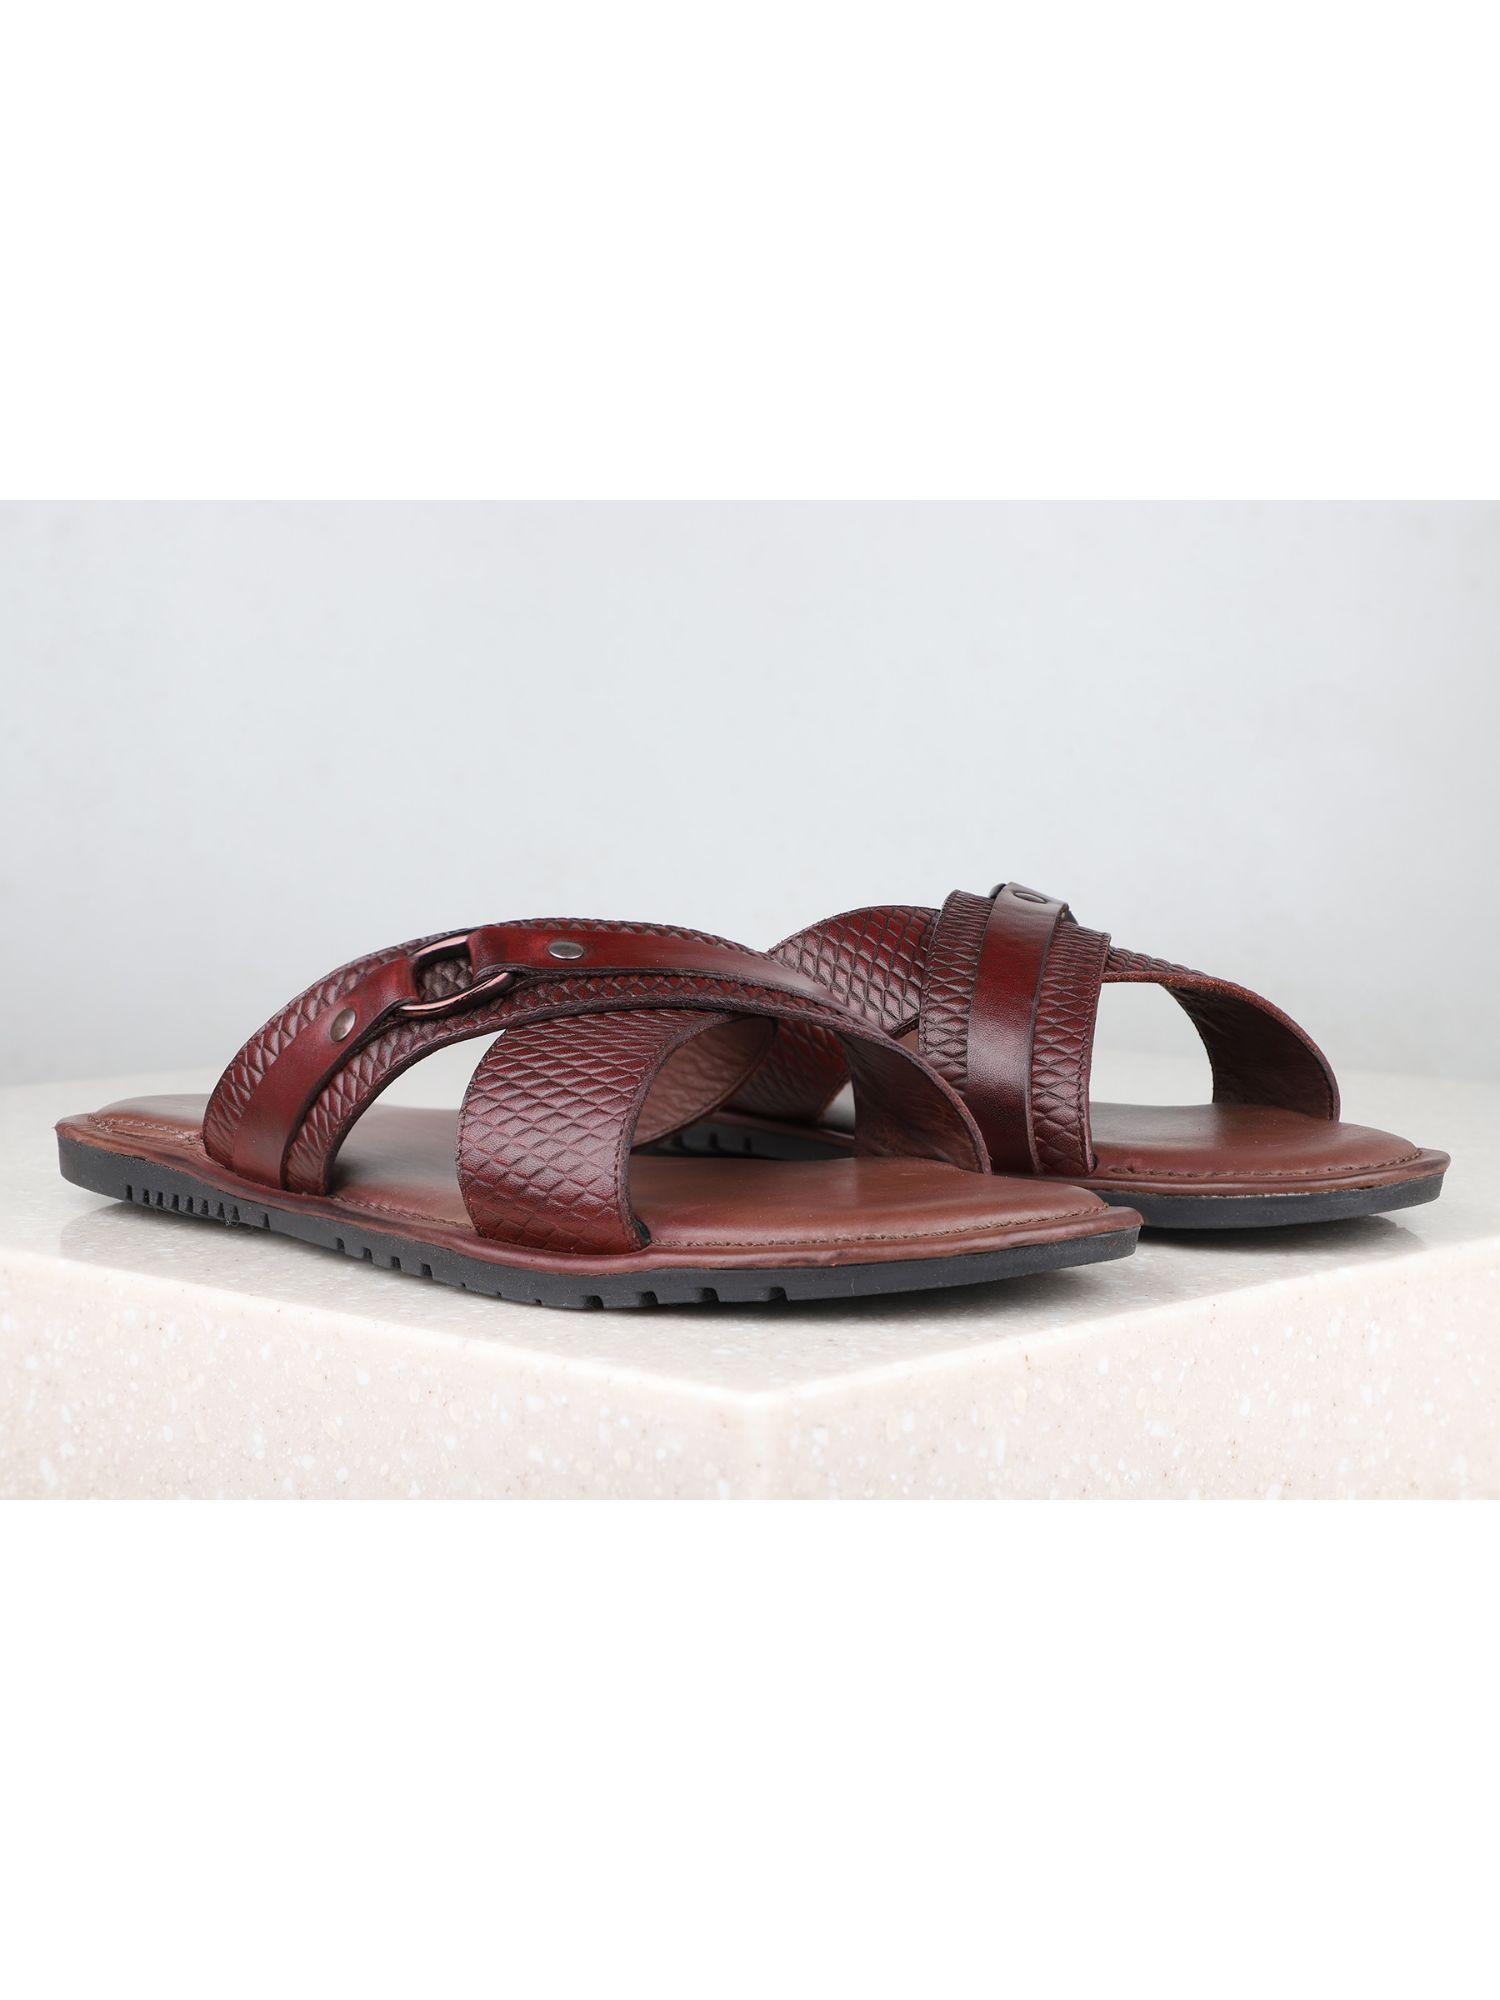 textured maroon sandals